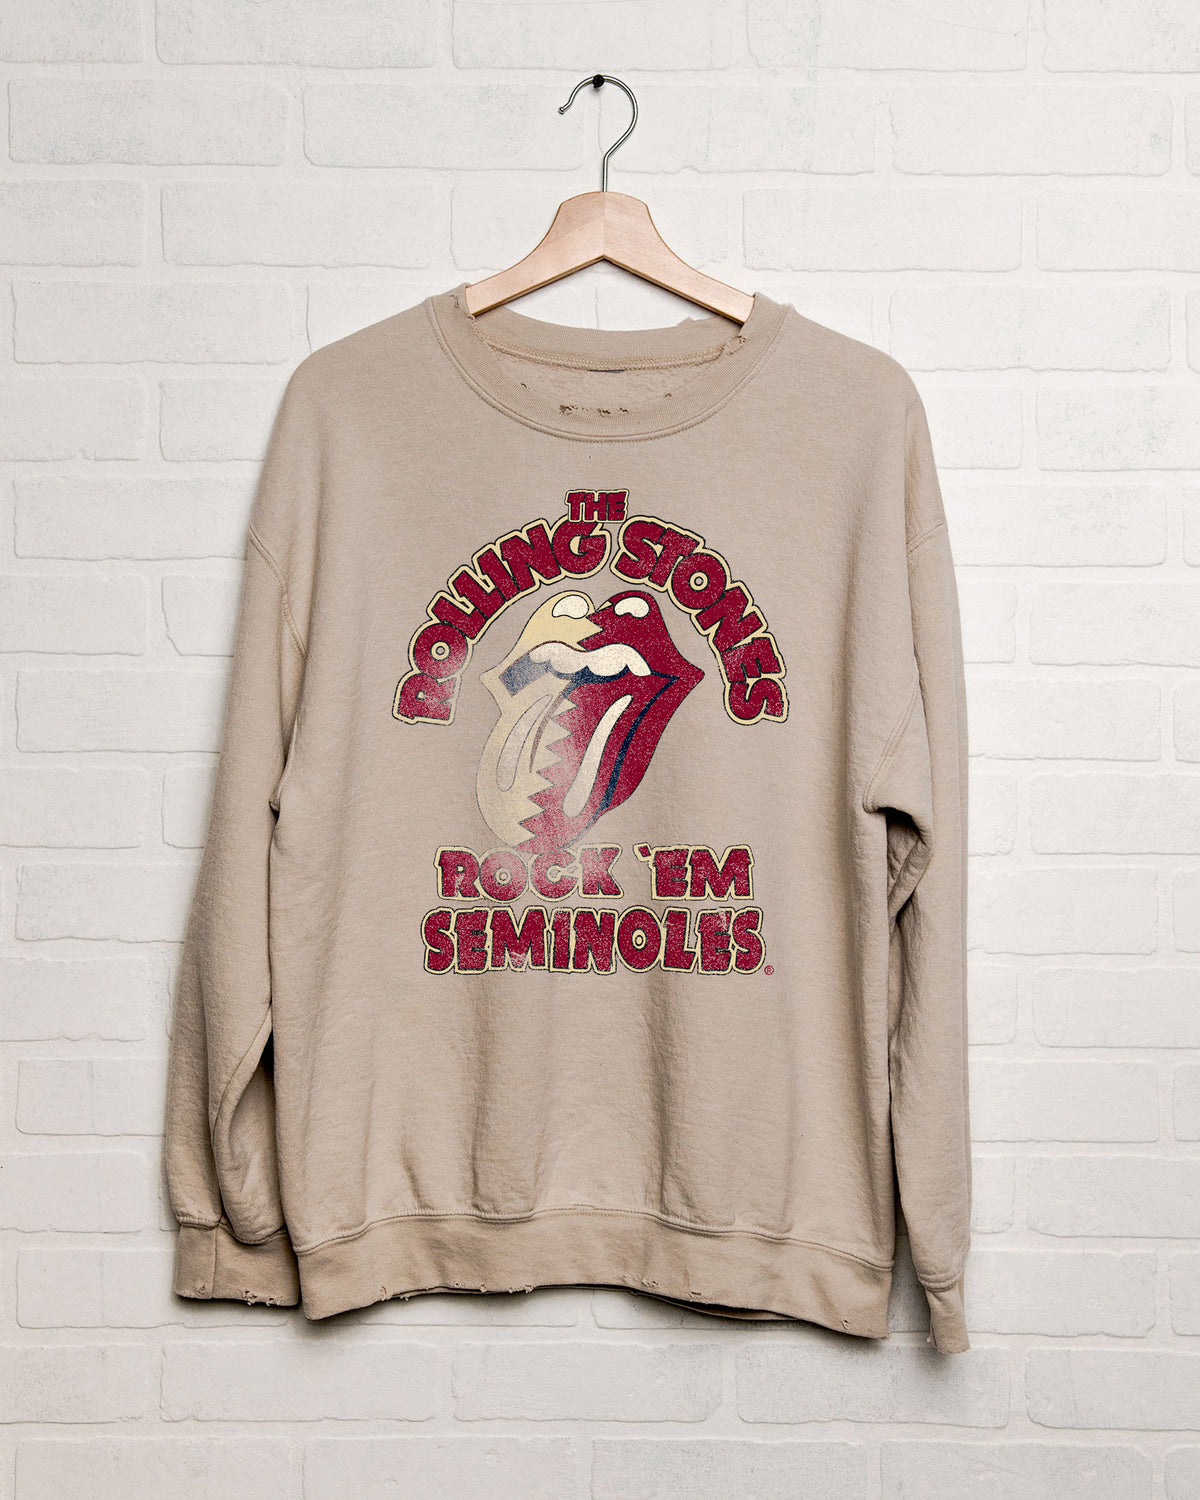 Rolling Stones Rock 'Em Seminoles Sand Thrifted Sweatshirt - shoplivylu